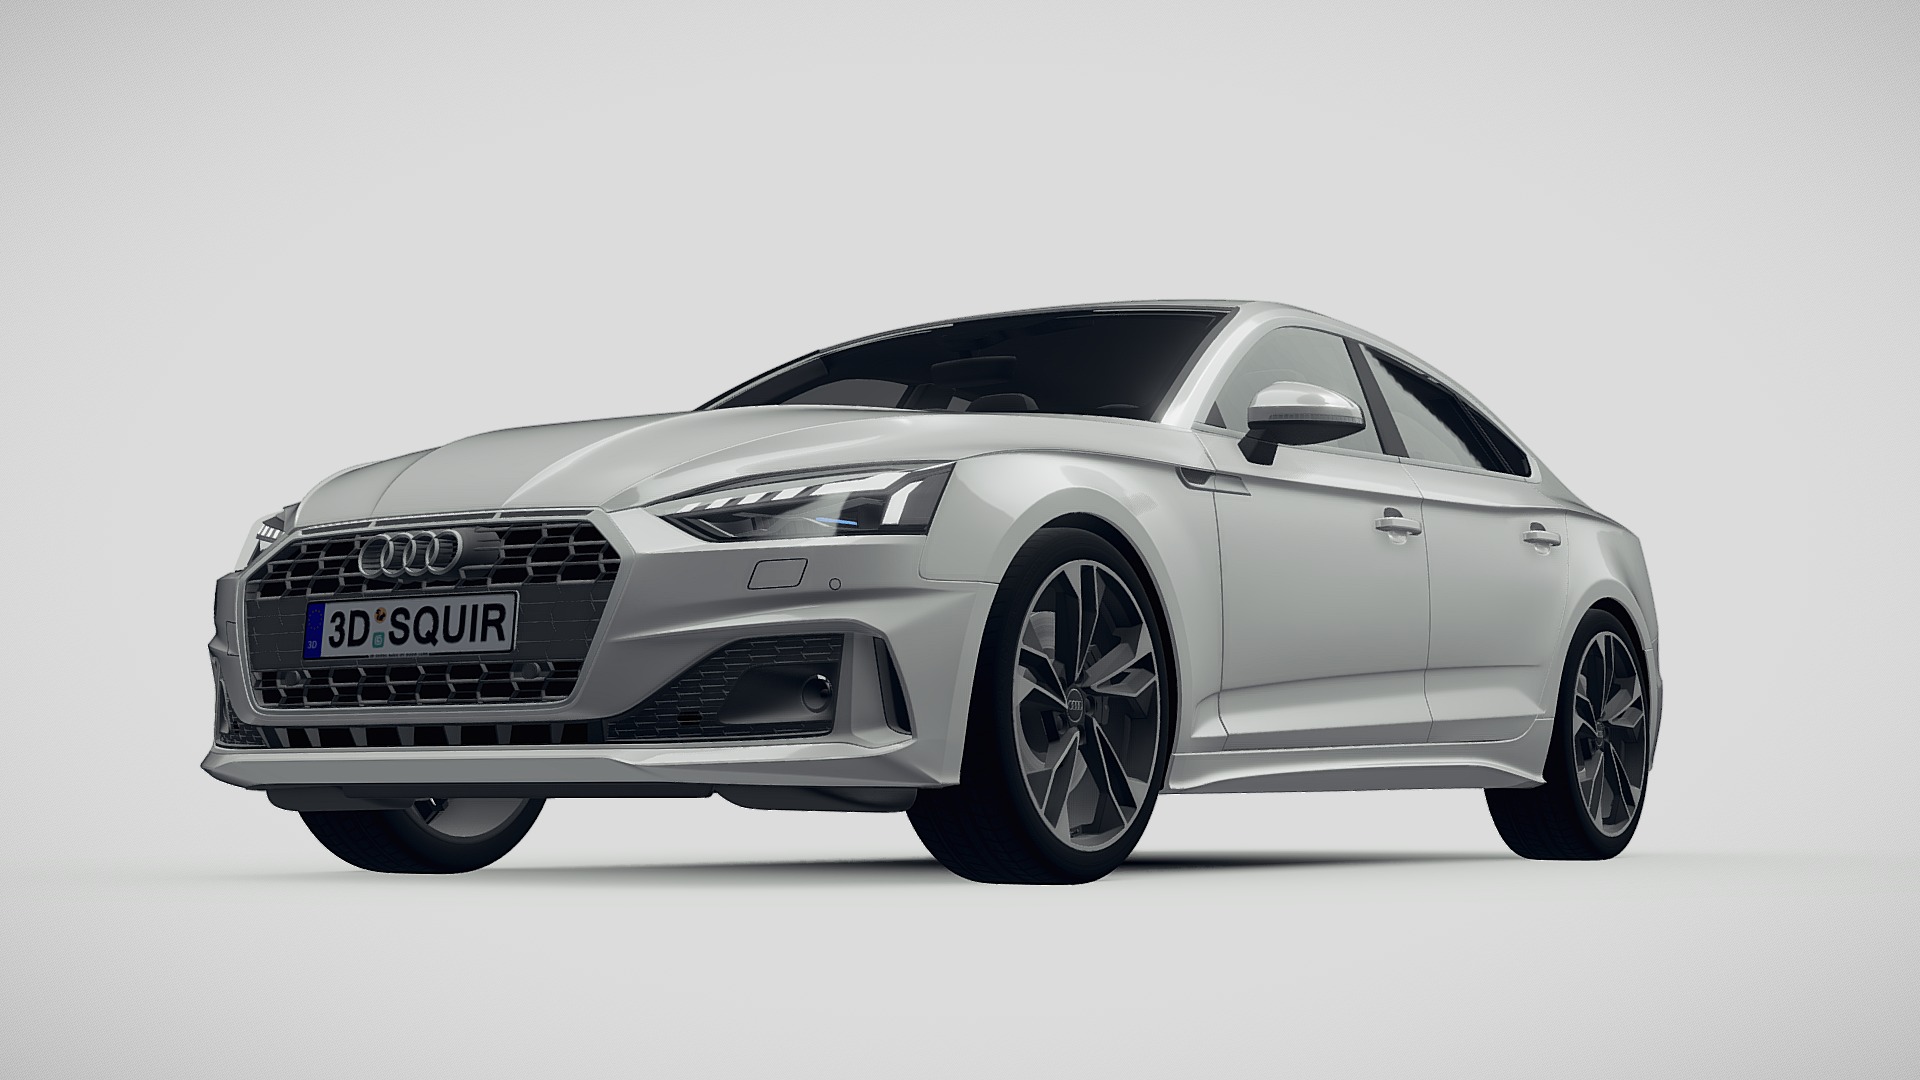 3D model Audi A5 Sportback 2020 - This is a 3D model of the Audi A5 Sportback 2020. The 3D model is about a silver sports car.